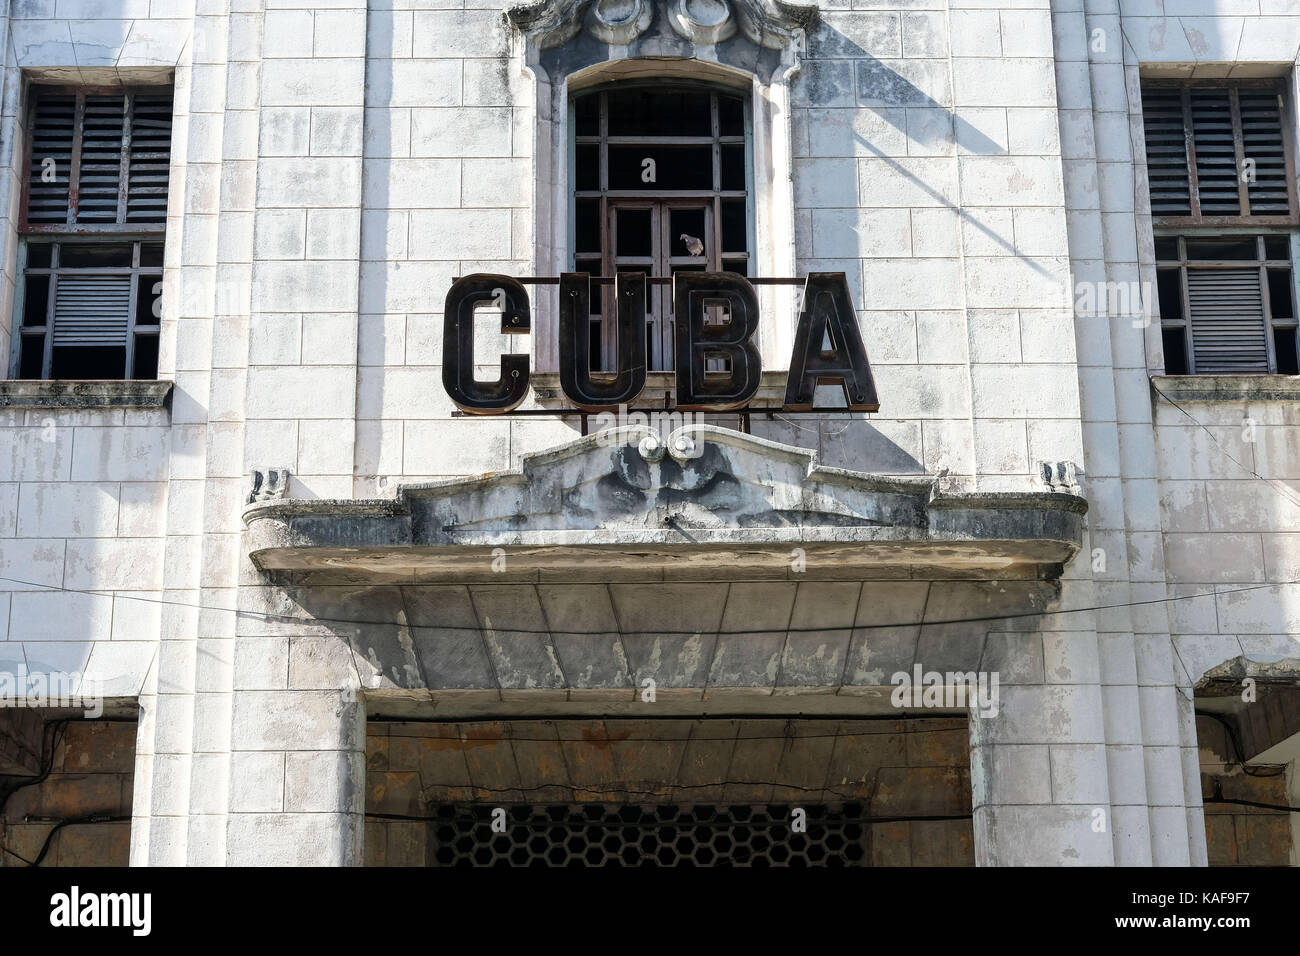 A decrepit building in Havana, Cuba. Stock Photo